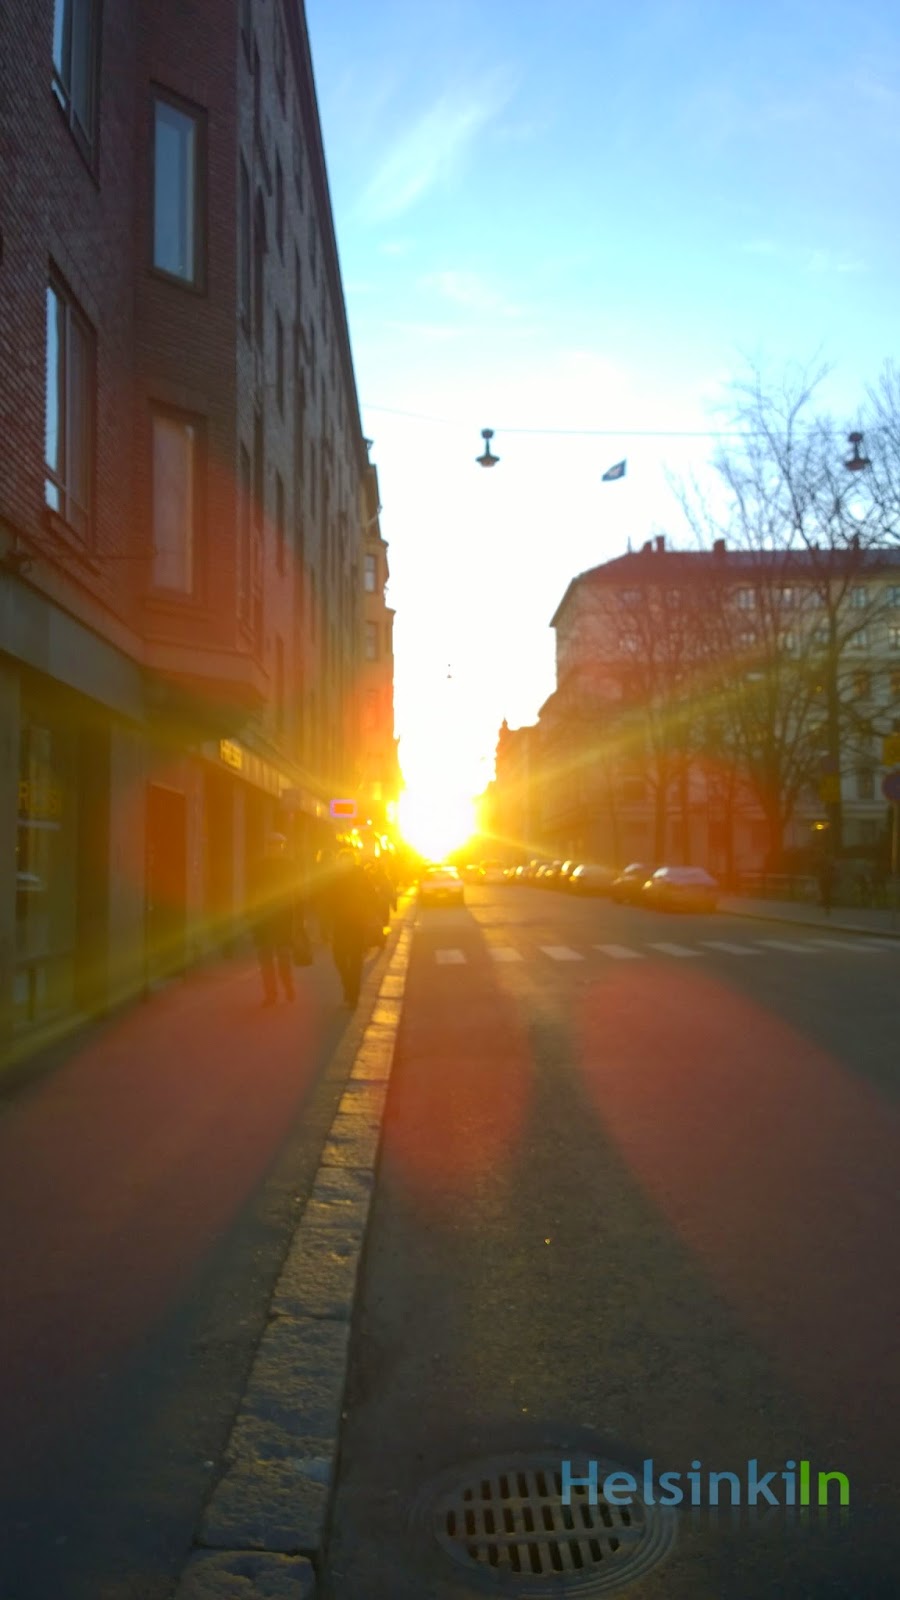 Bight light in the streets of Helsinki